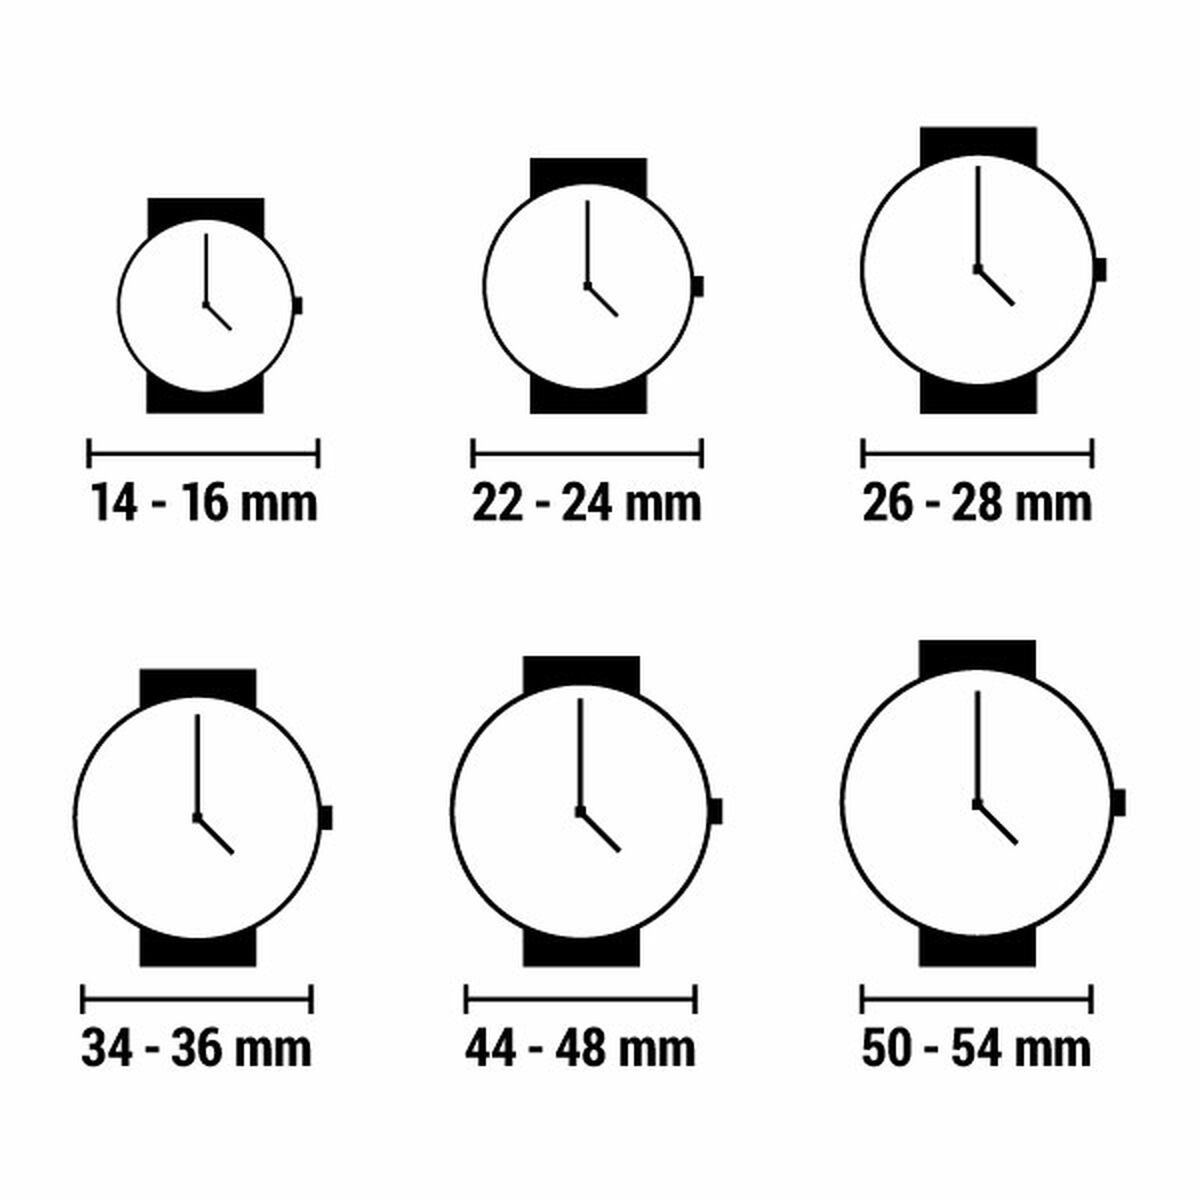 Reloj Mujer Ice IW019228 (Ø 36 mm)